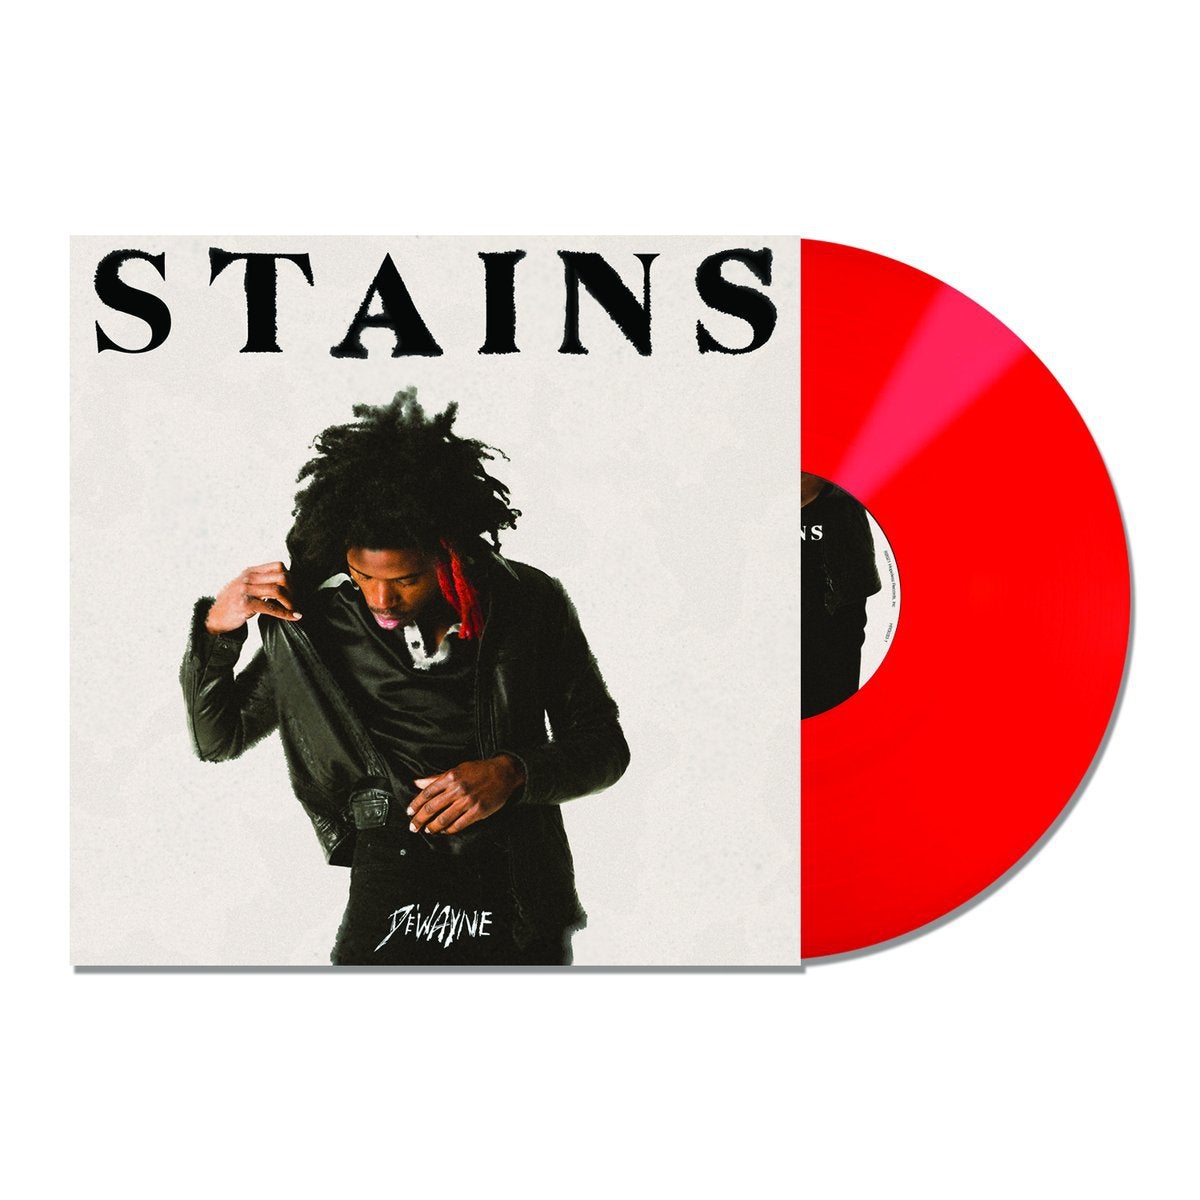 DE’WAYNE - Stains - LP - Red Vinyl